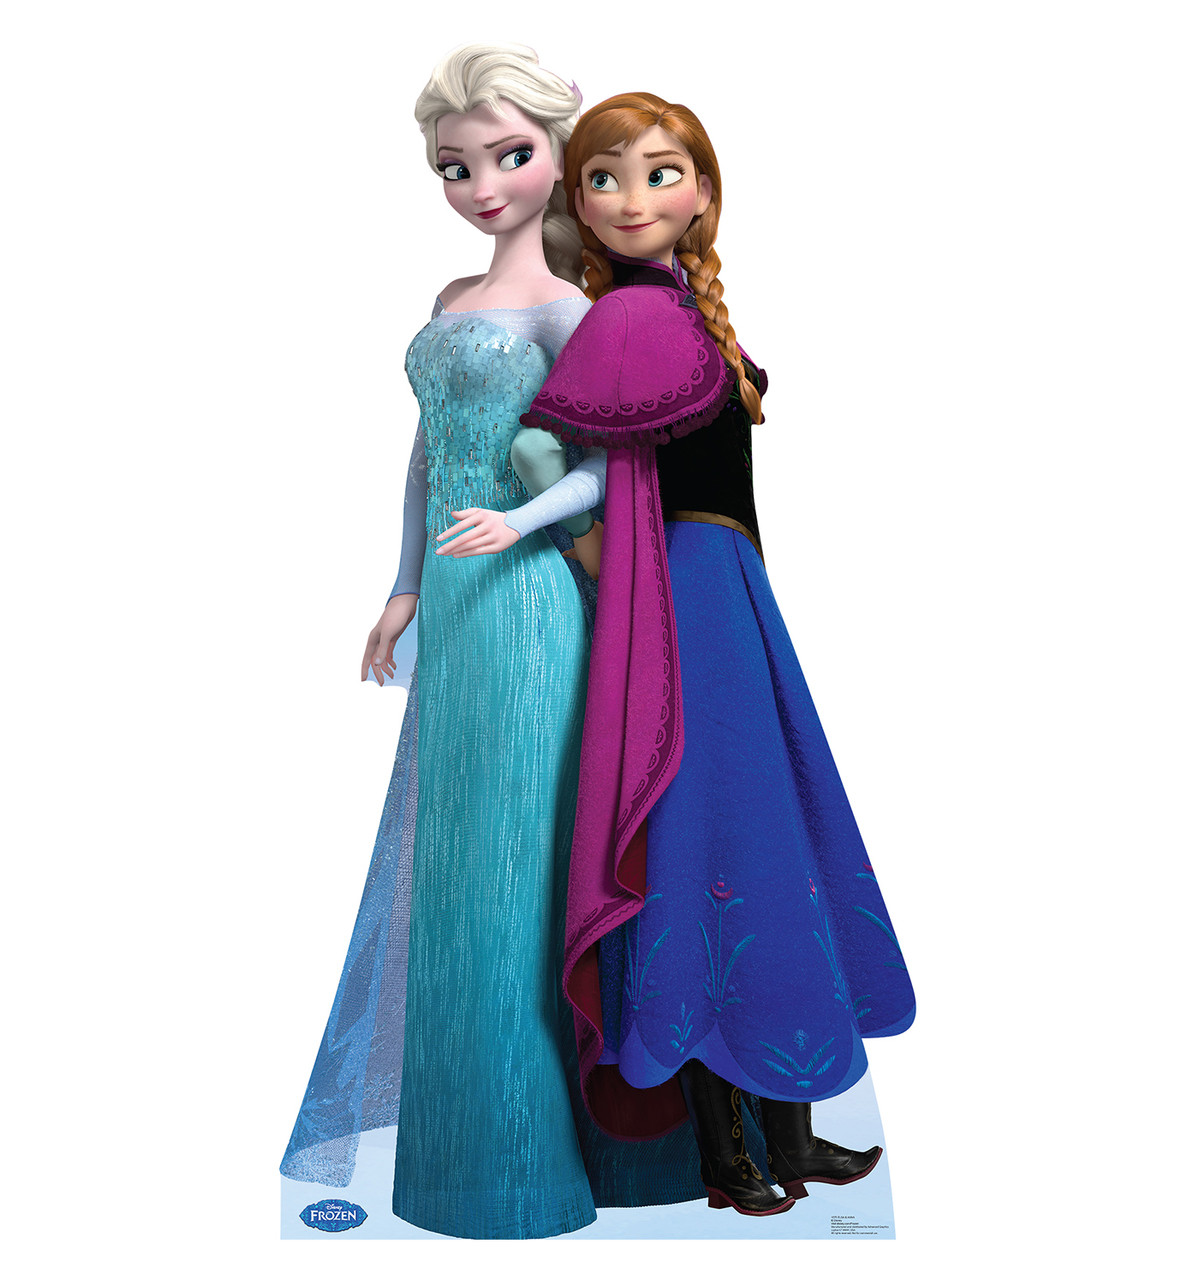 Elsa and Anna (Disney's Frozen)